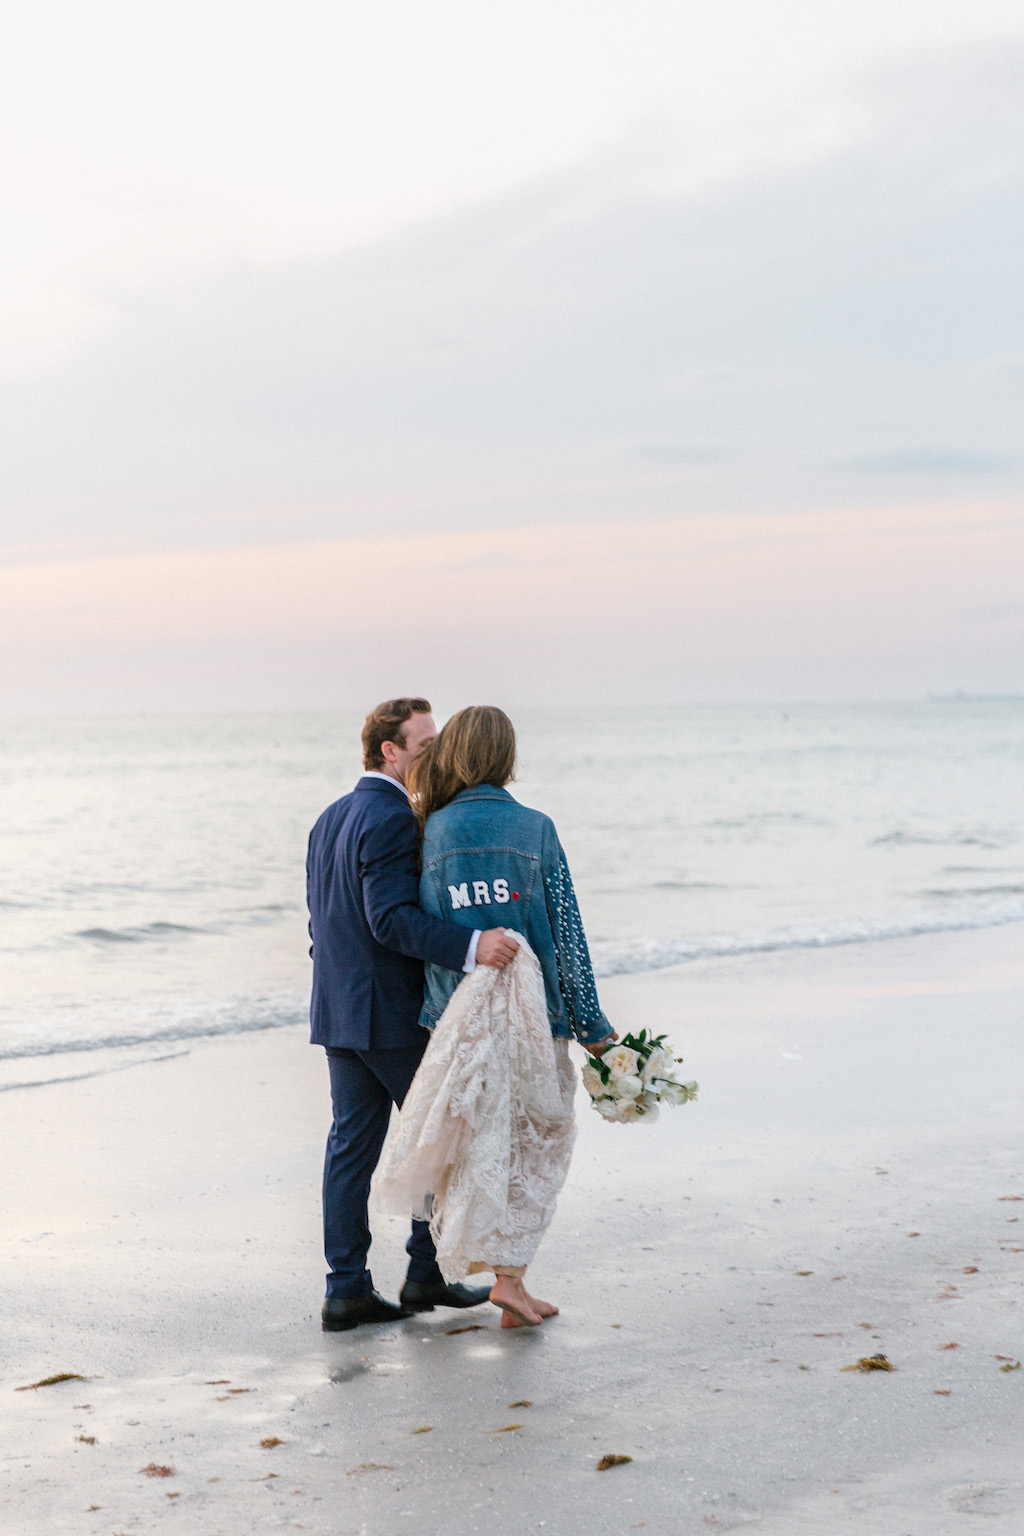 Romantic Florida Bride and Groom Walking on the Beach, Bride in Custom Mrs Jean Jacket